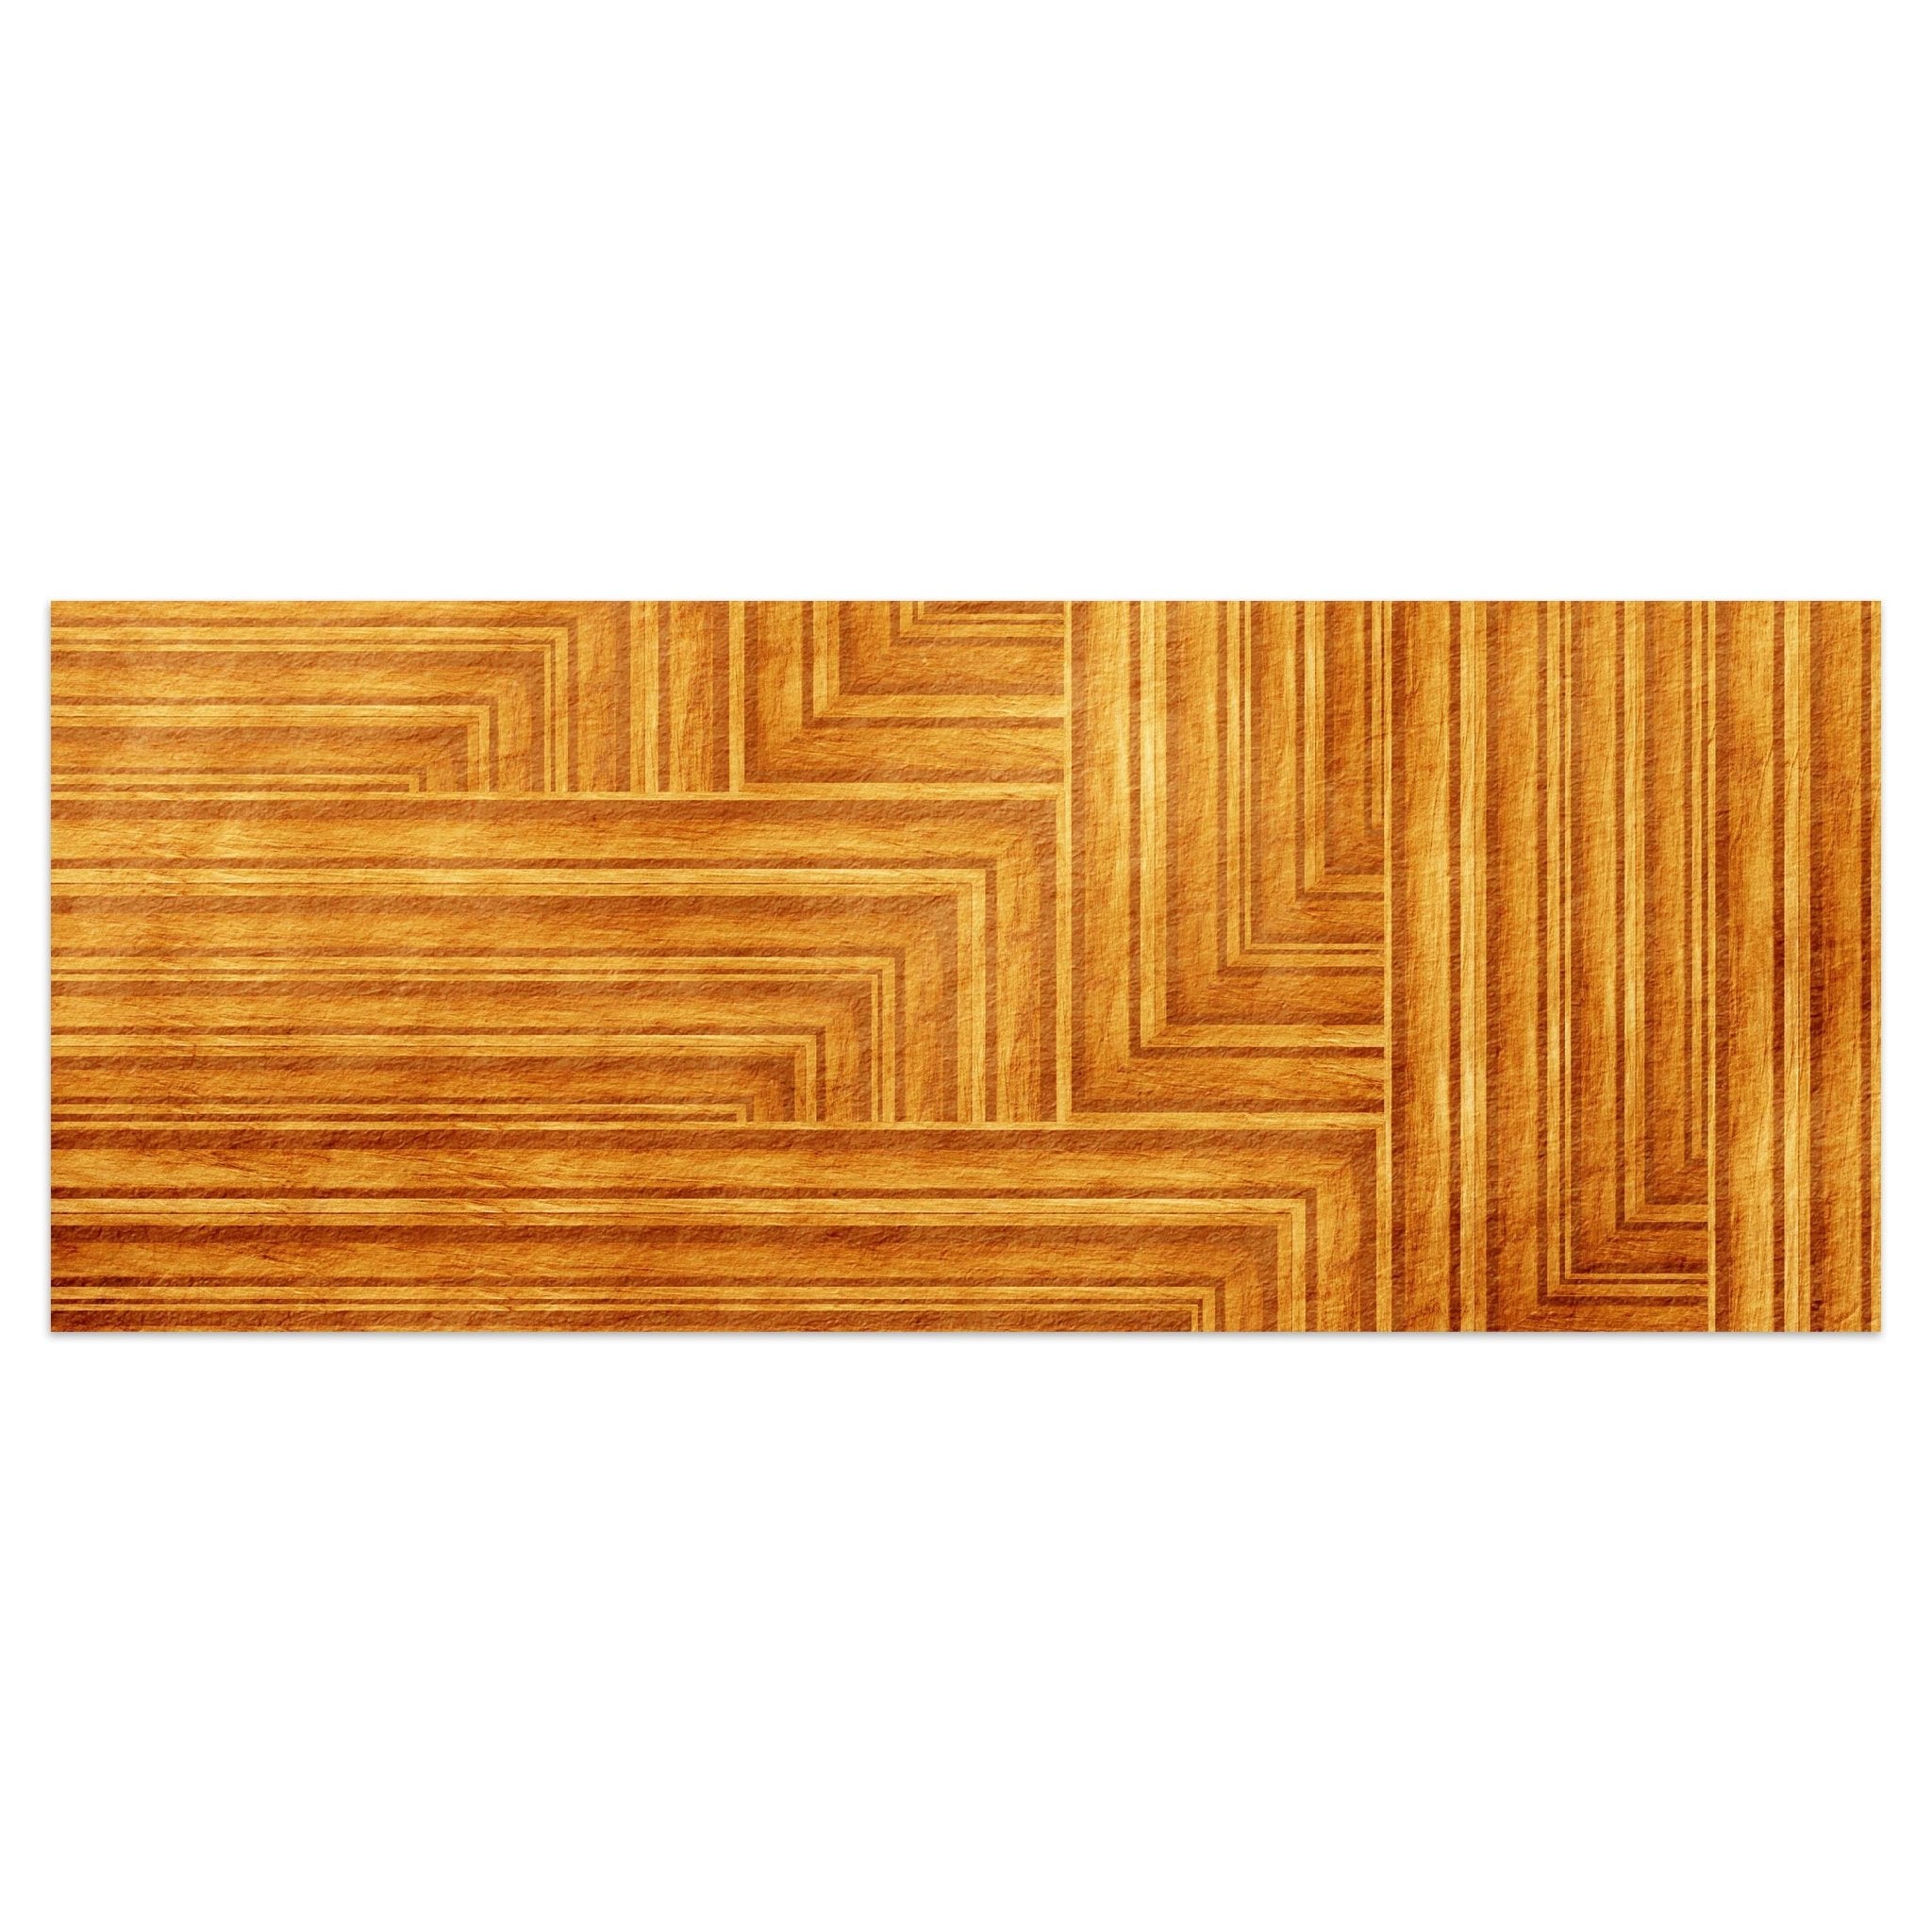 Leinwandbild Holztexture M0724 kaufen - Bild 1